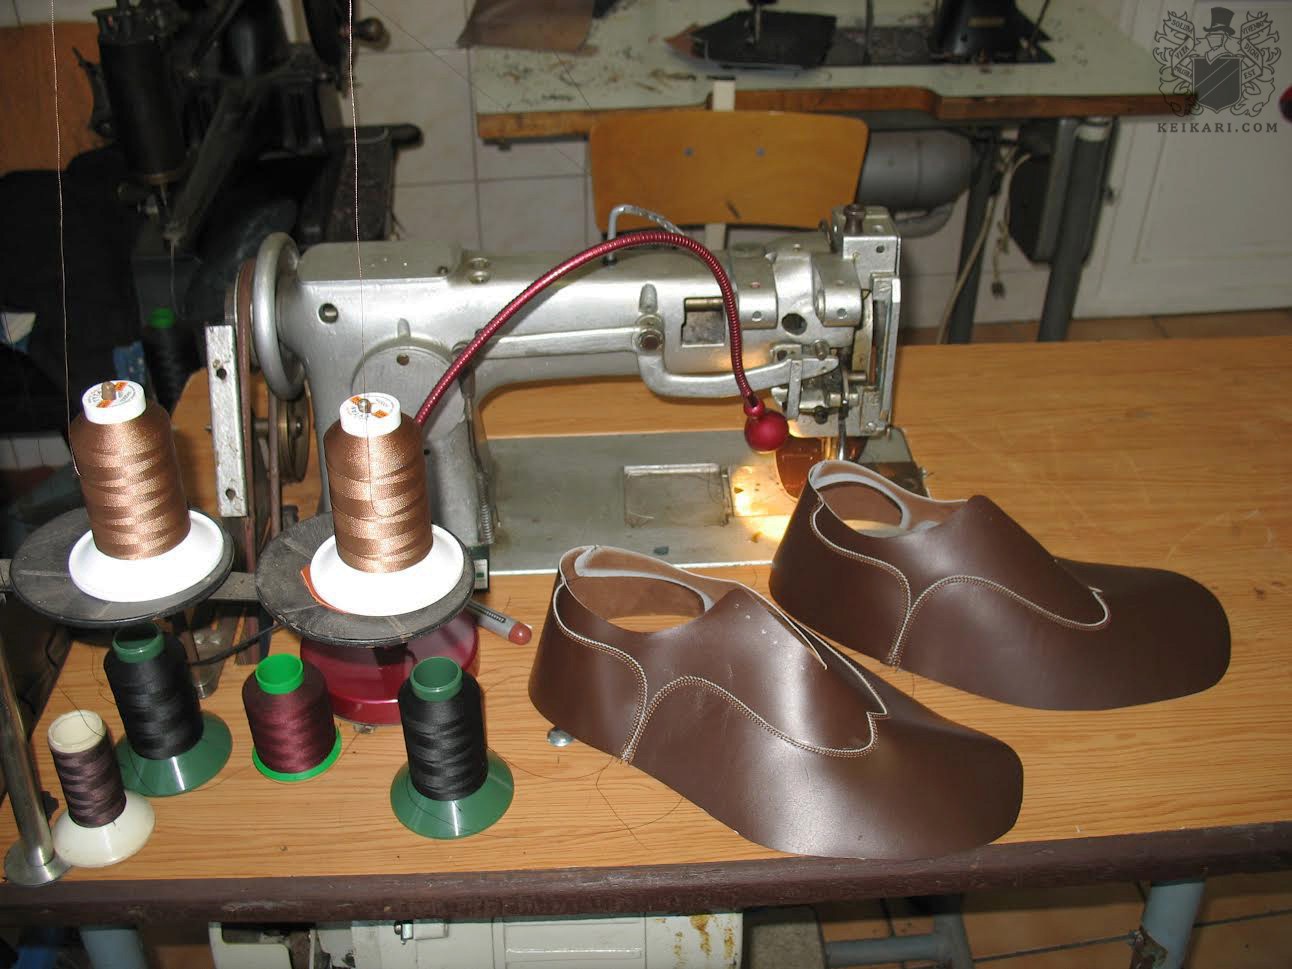 Made_to_measure_shoes_from_Buday_at_Keikari_dot_com06